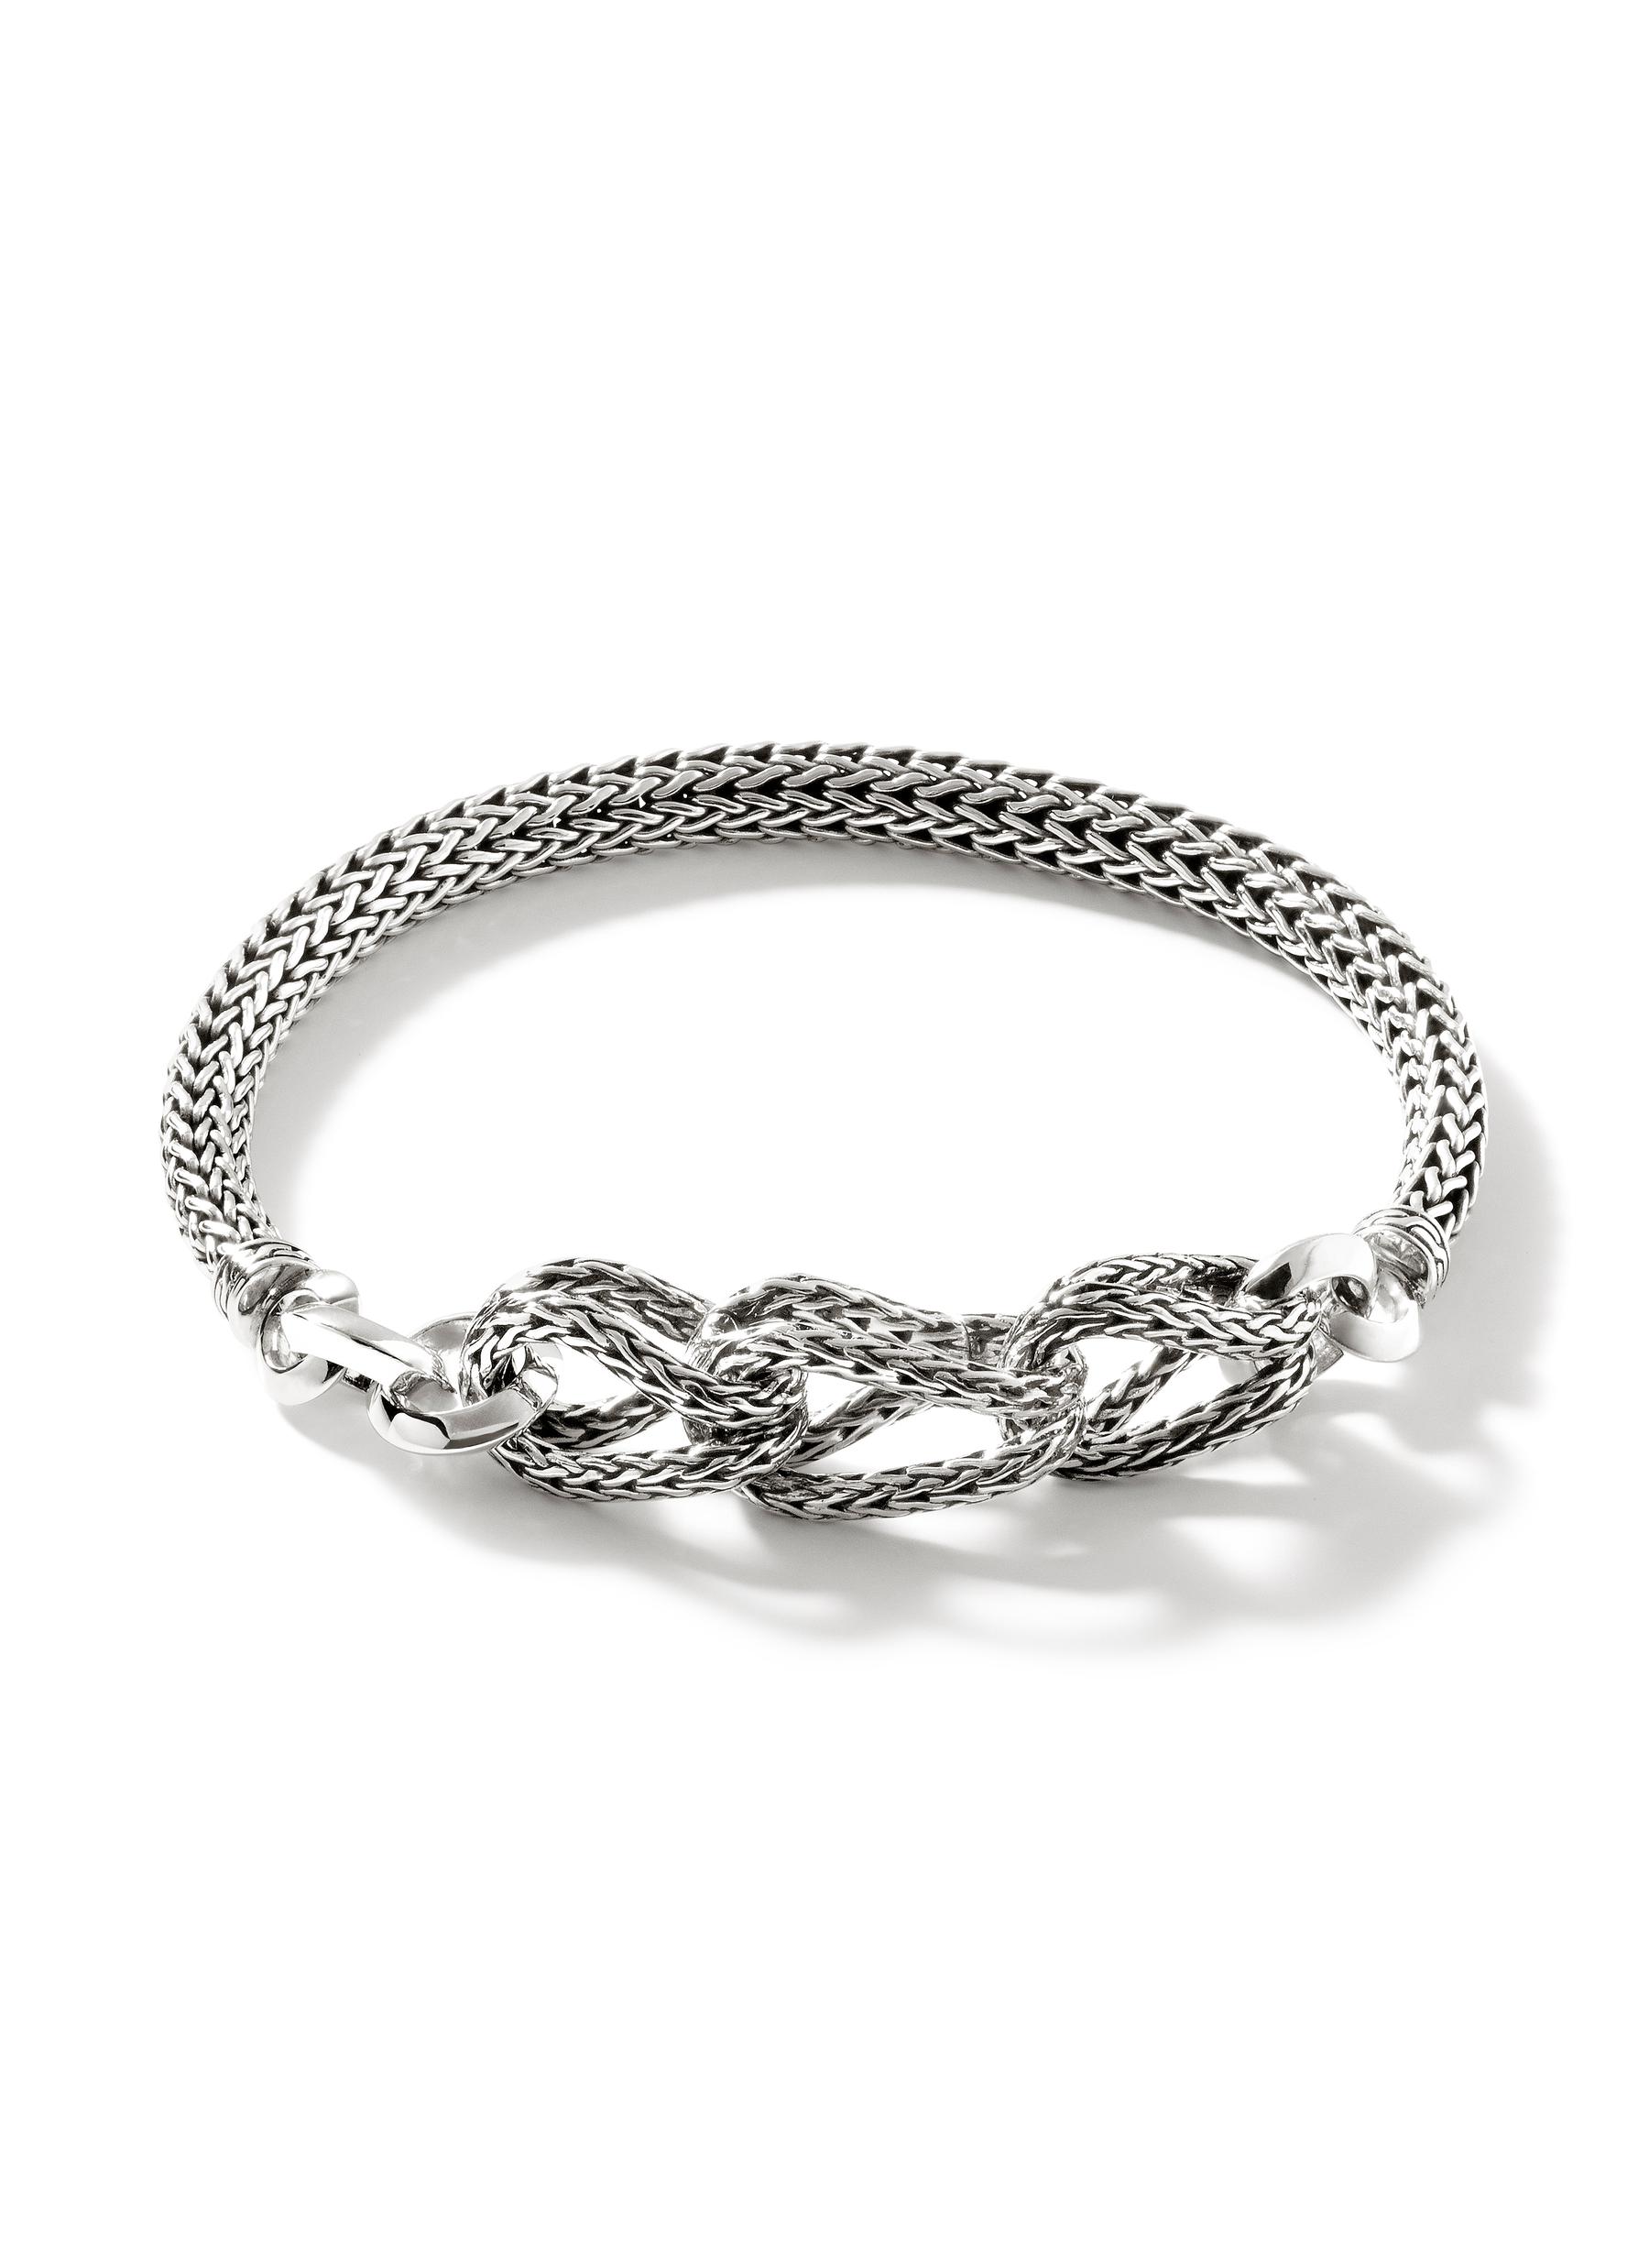 Buy Bracelets online : Engraving + Sterling silver 925 bracelet with circle  & white balls 17 + 3cm - Com-forsa S.L.